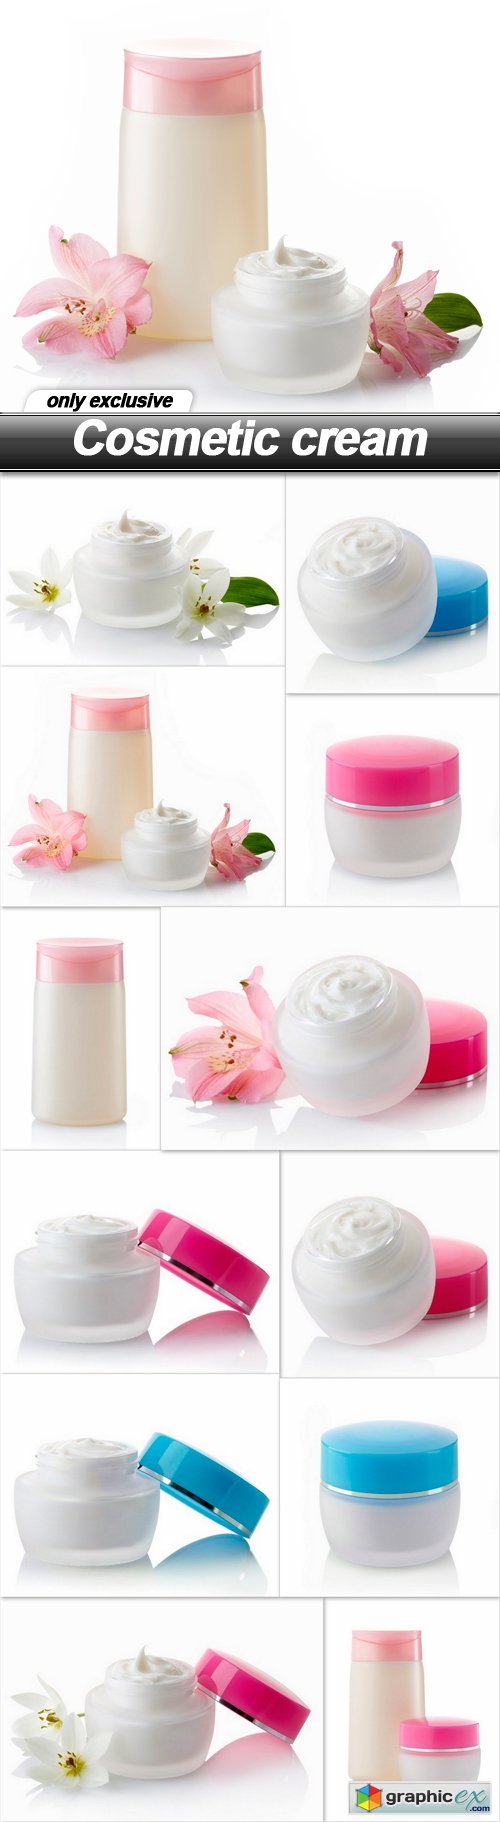 Cosmetic cream - 12 UHQ JPEG